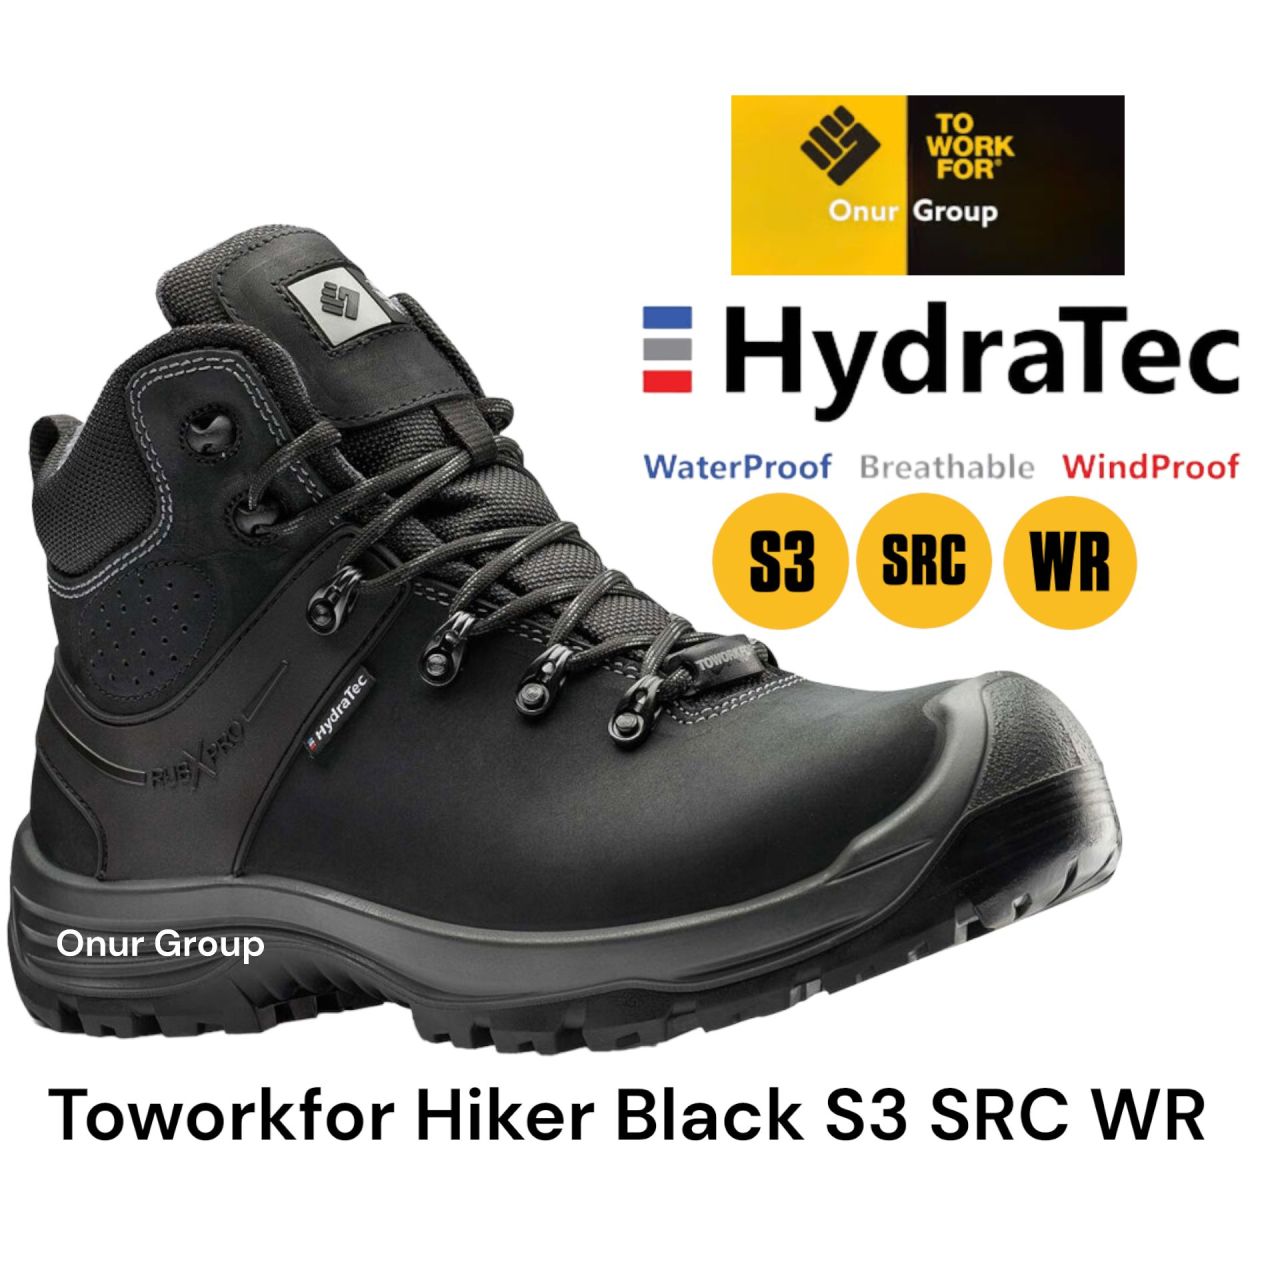 Toworkfor Hiker Black S3 SRC WRU